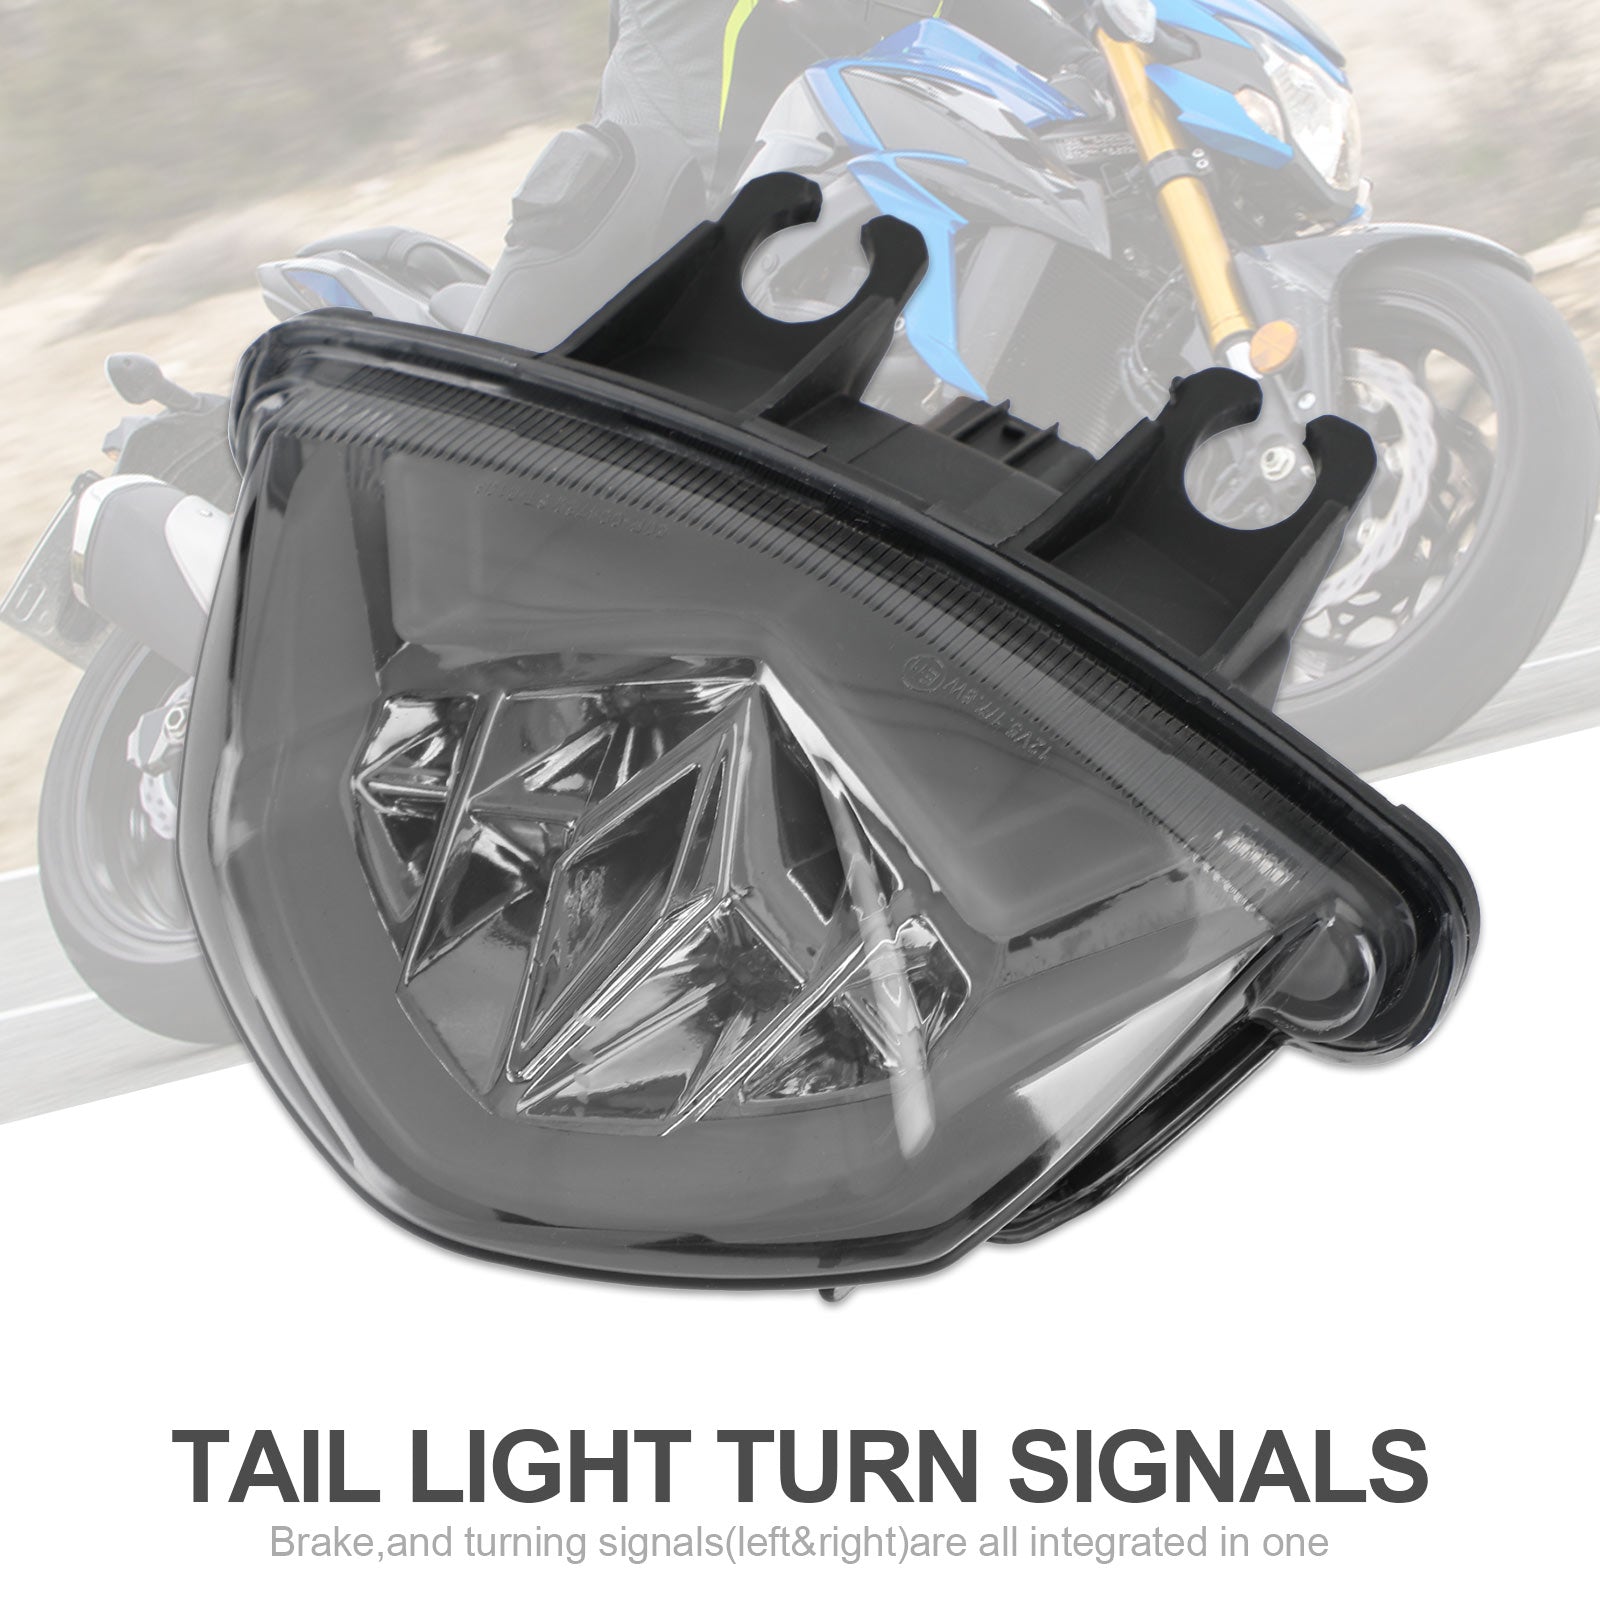 LED Tail Light Turn Signal For Suzuki GSXS 1000 F GSX-S 750 Z 2017-2021 Generic